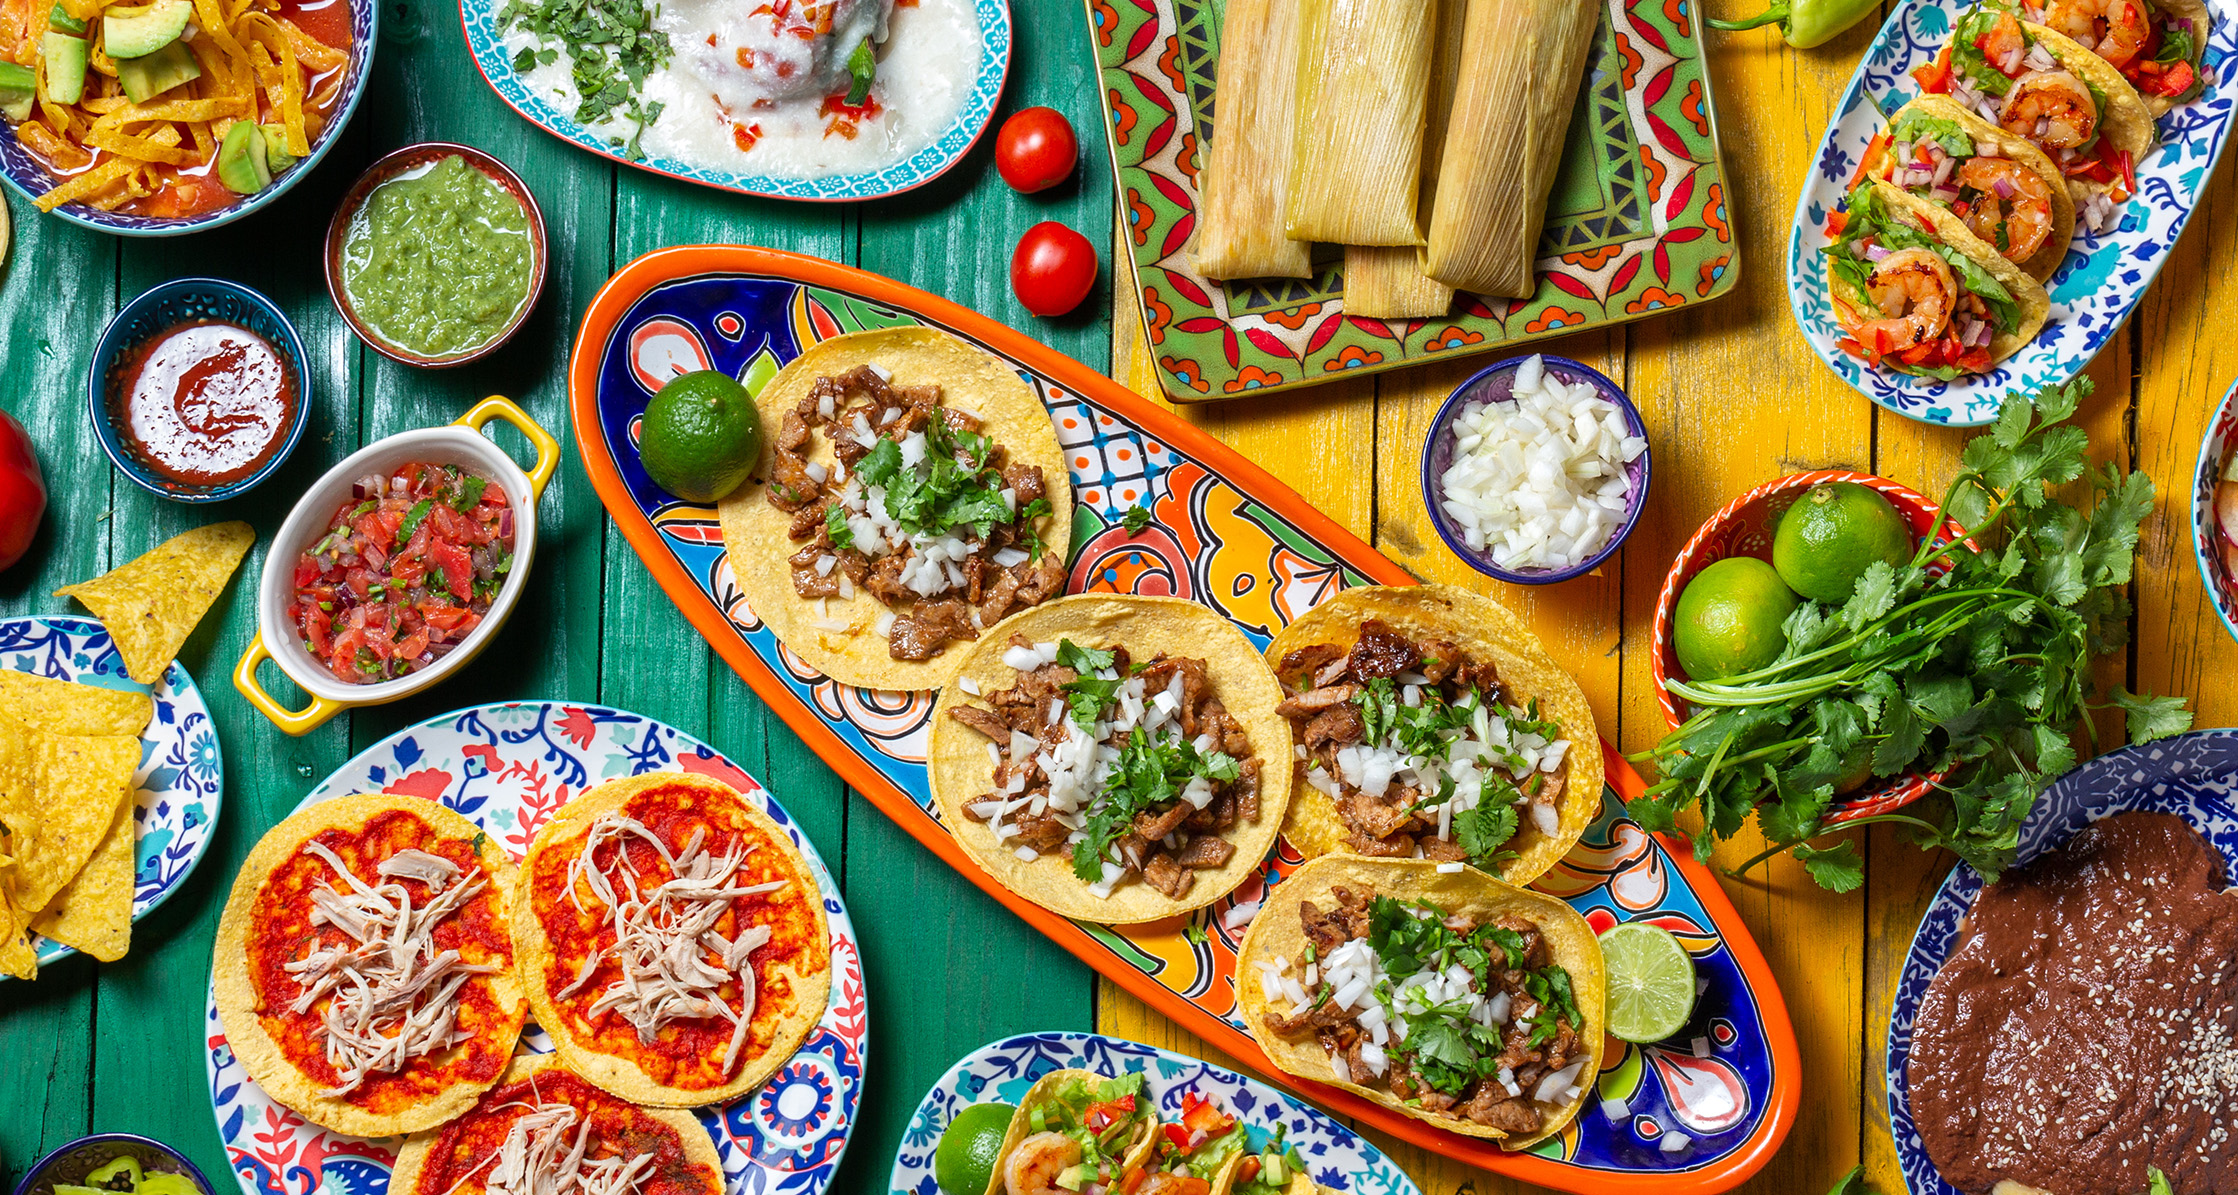 Mexican festive food for Cinco de Mayo celebration.